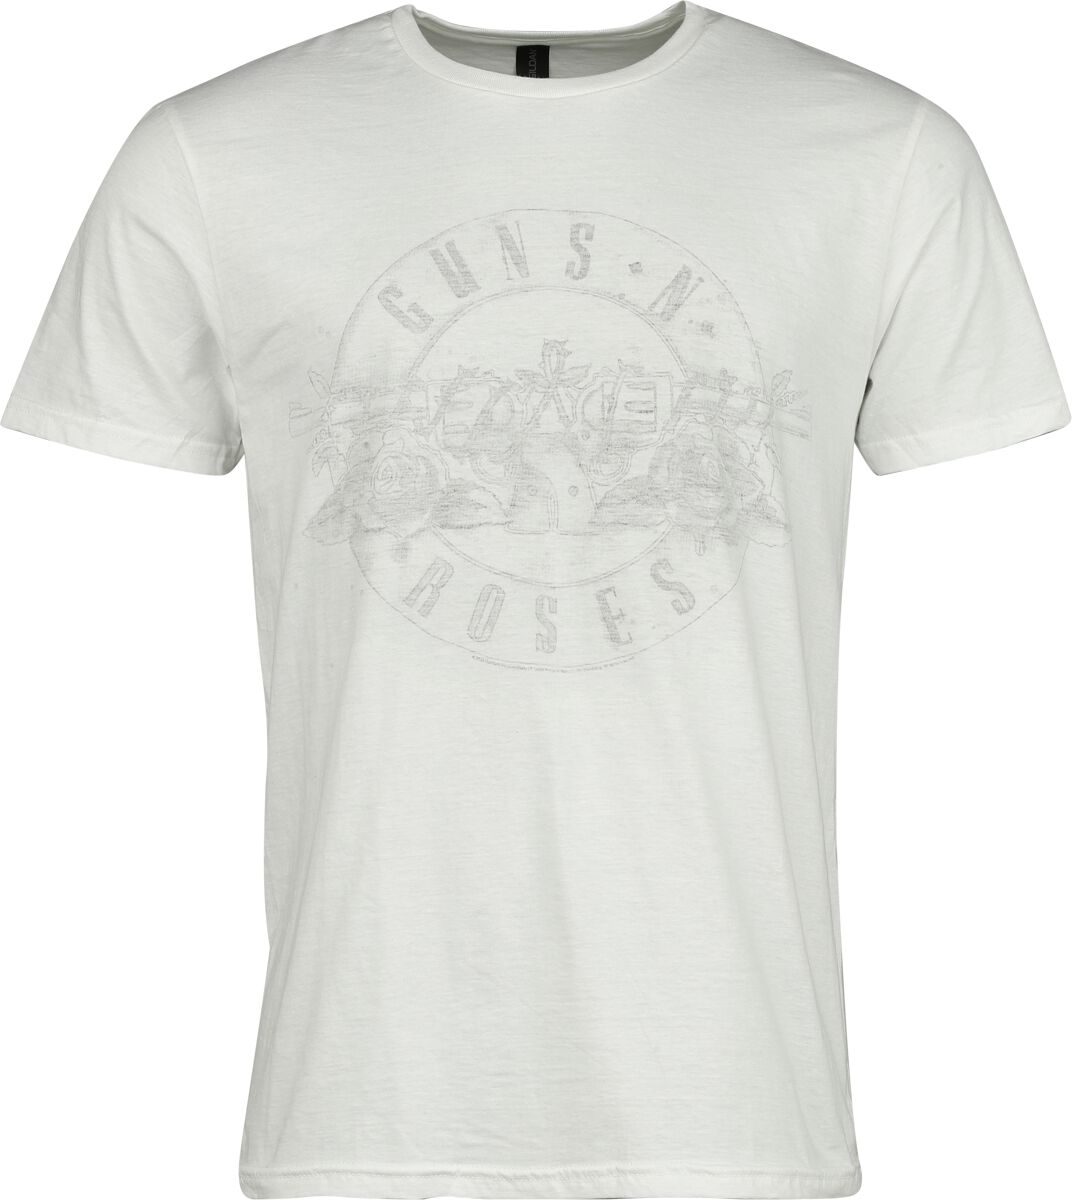 Guns N` Roses T-Shirt - Watercolour Bullet - M bis 3XL - für Männer - Größe XL - weiß  - Lizenziertes Merchandise!